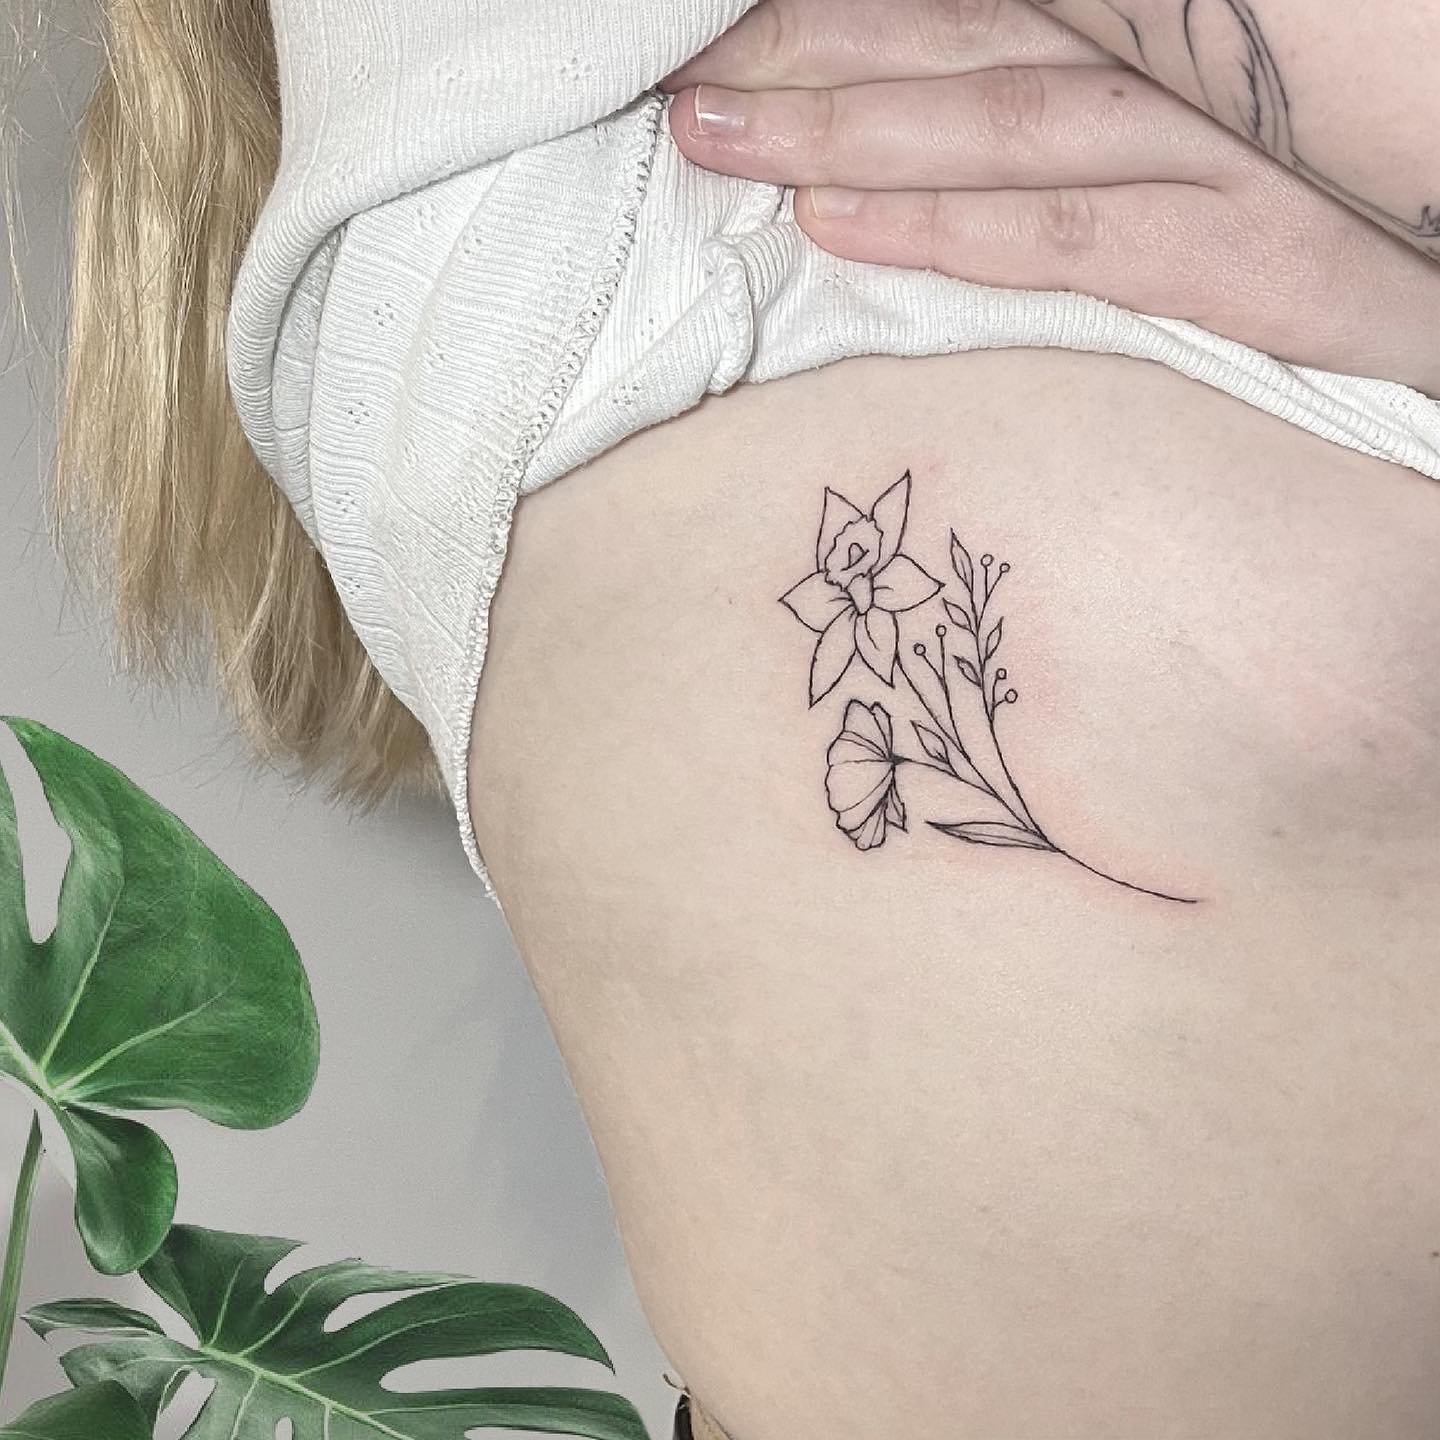 100 Meaningful Daffodil Tattoo Designs - Tattoo Me Now